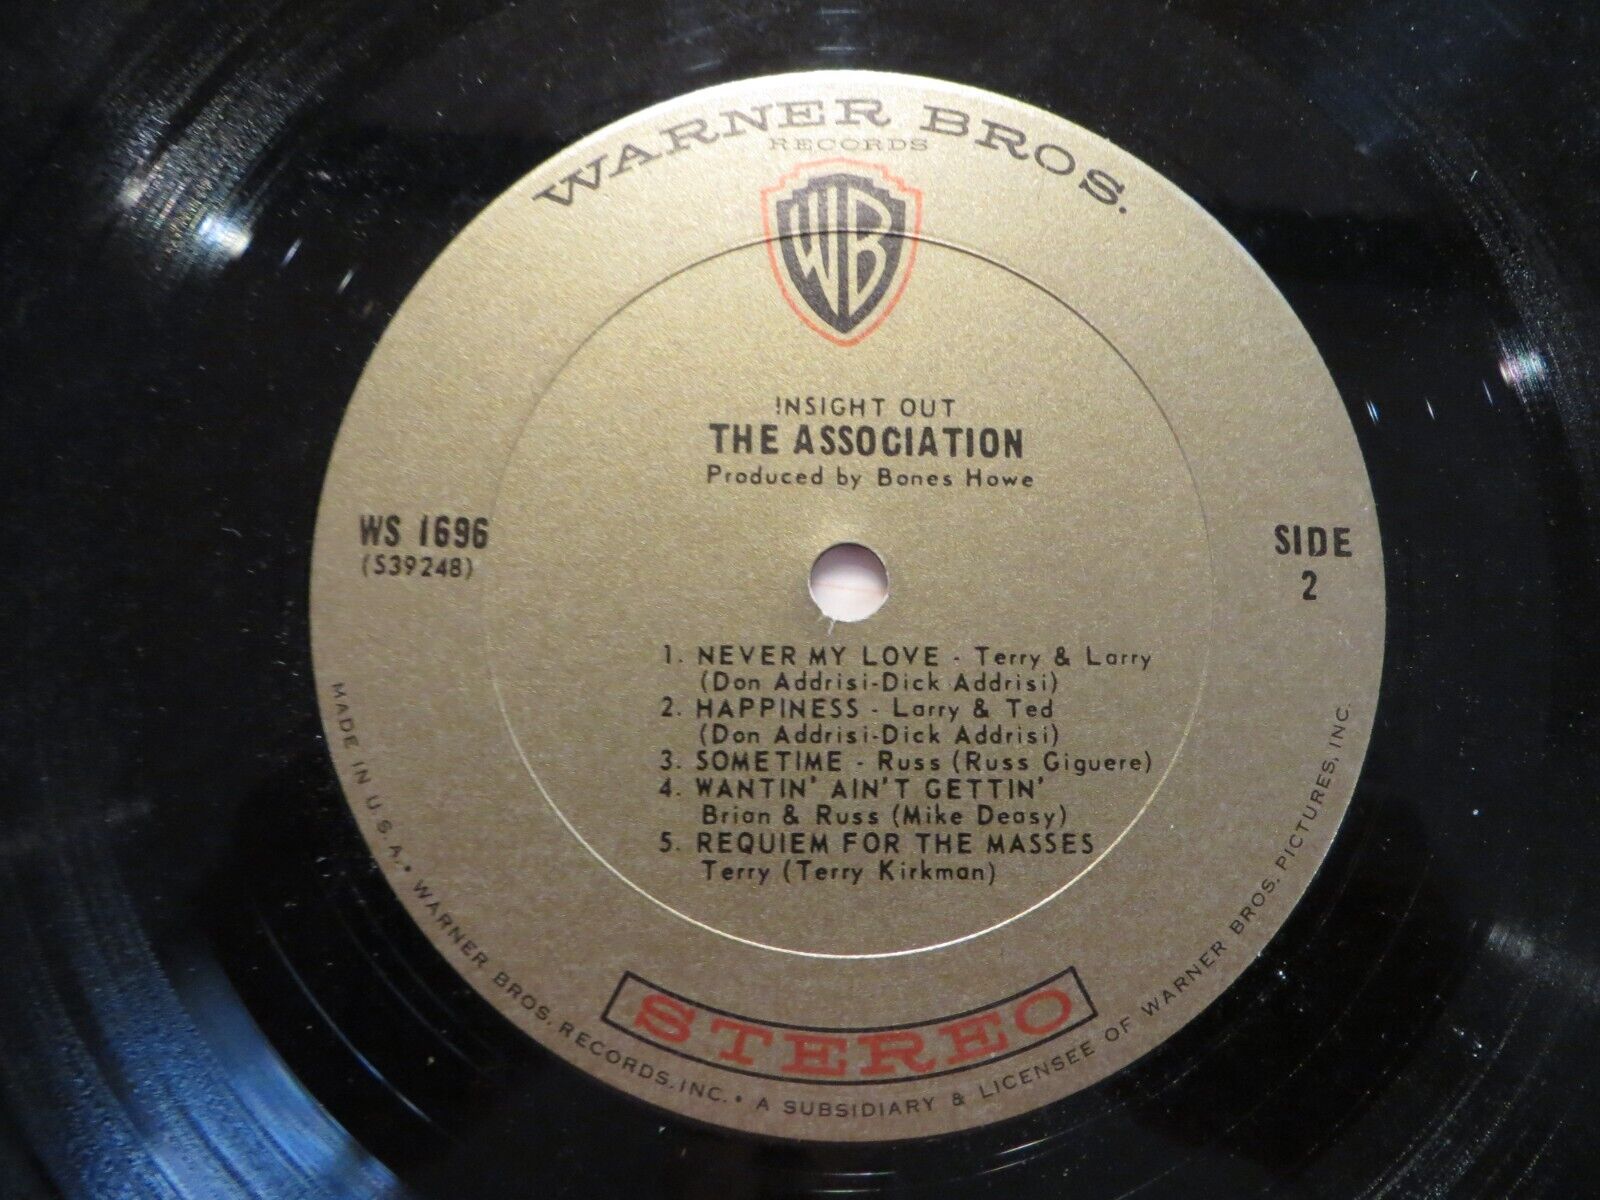 The Association – Insight Out - 1967 - Warner Bros. WS 1696 Vinyl LP  G+/Generic! | eBay